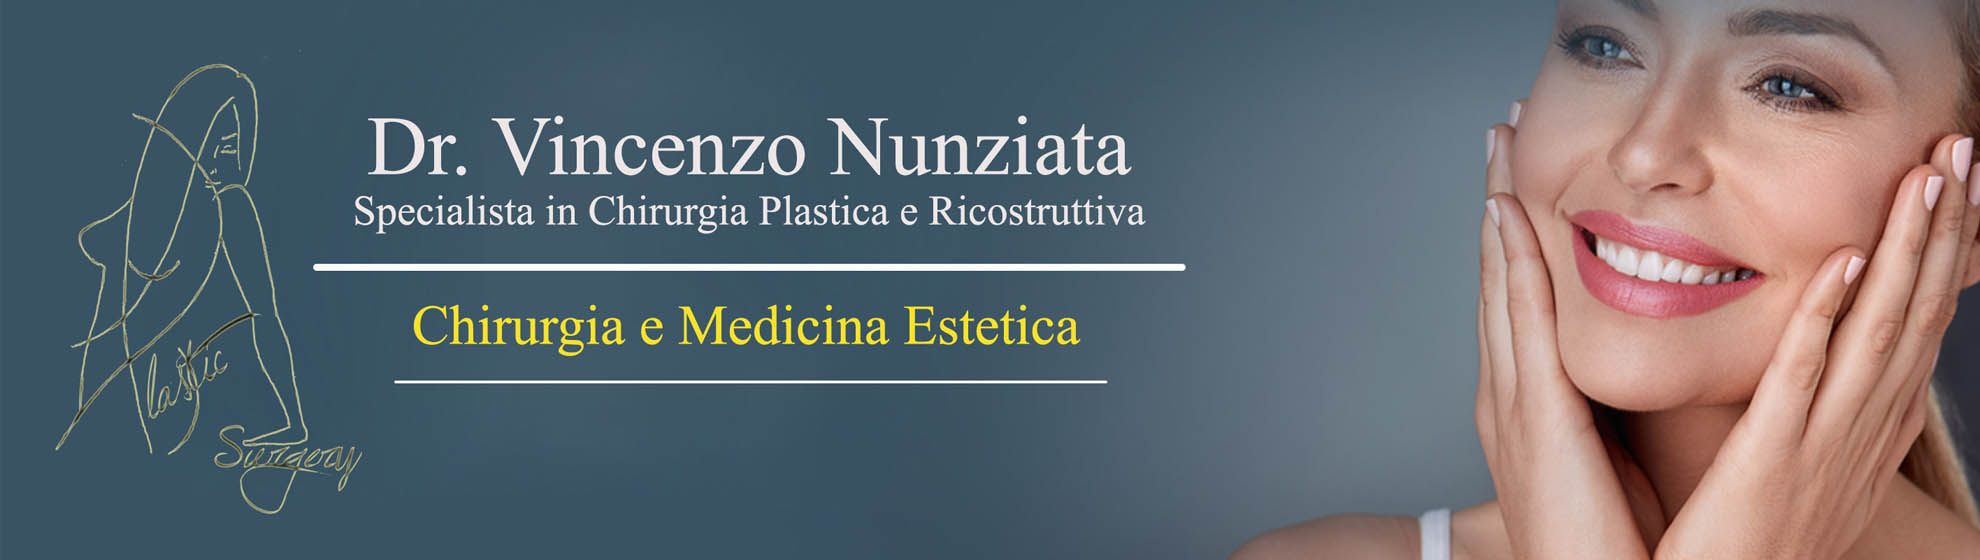 Dr. Vincenzo Nunziata